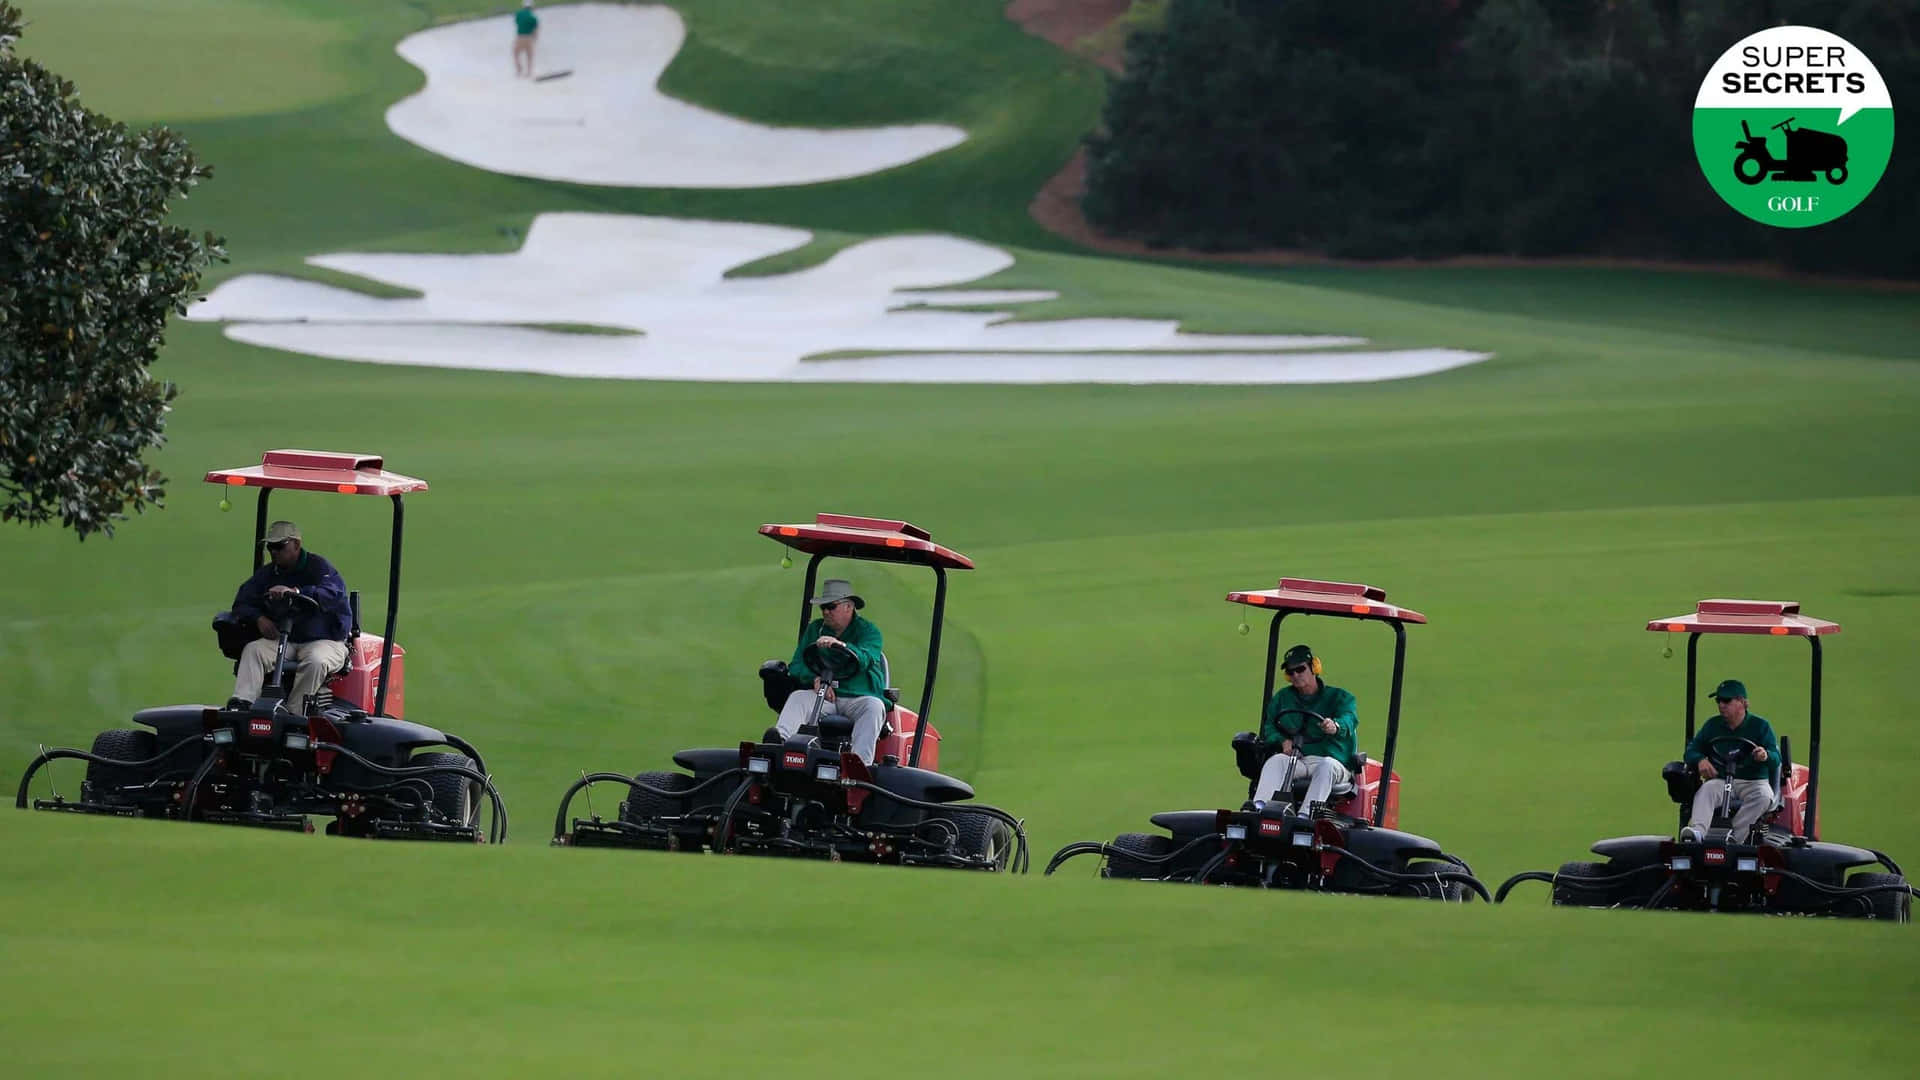 Four Golf Carts On A Green Grassy Field Wallpaper